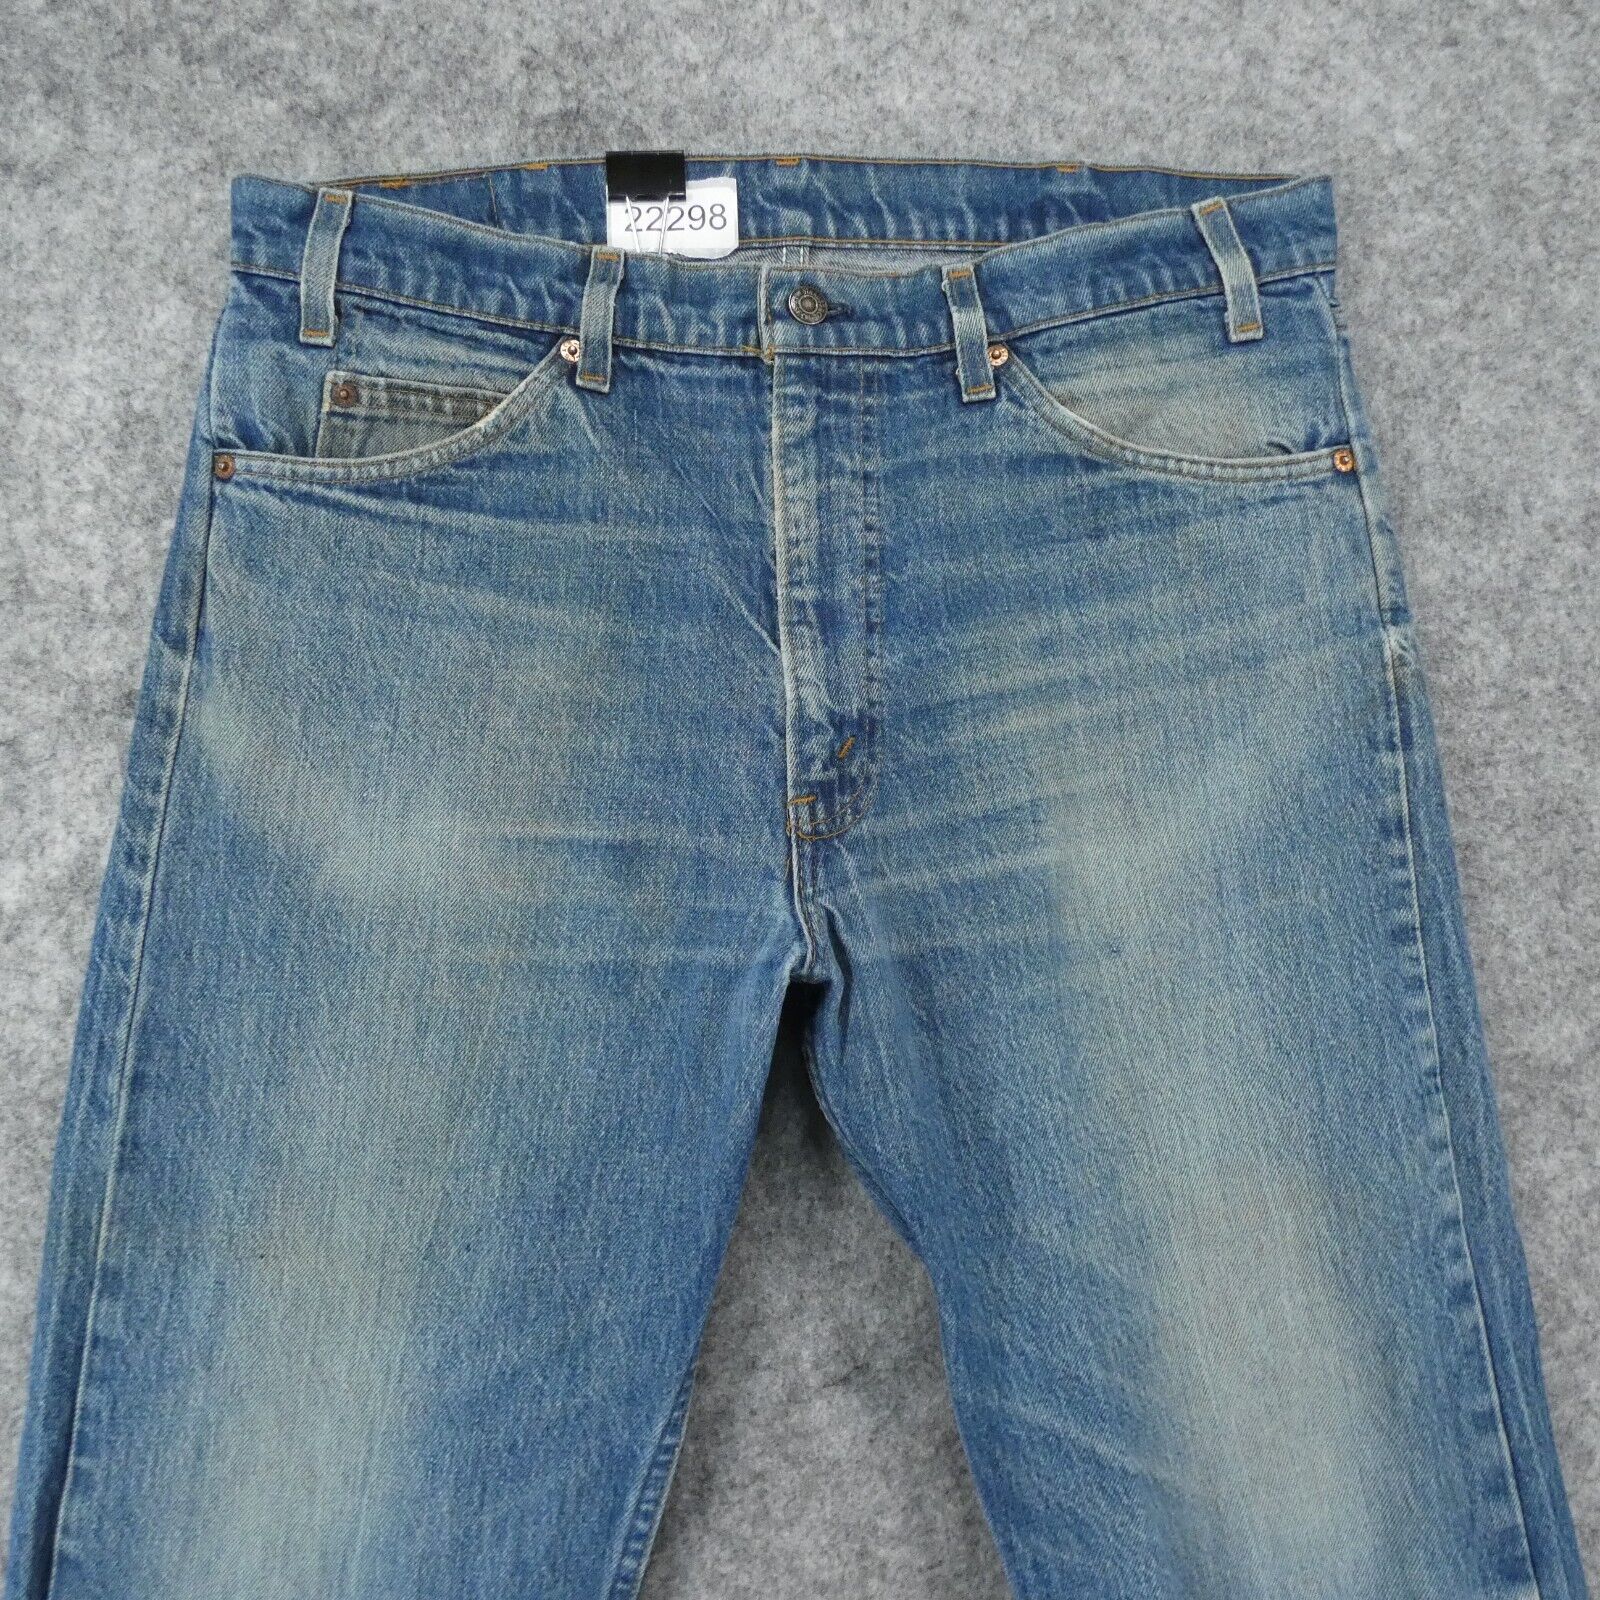 Vintage 80s Levis 505 Orange Tab Jeans Mens 36x32 Whiskering Fade Marks USA